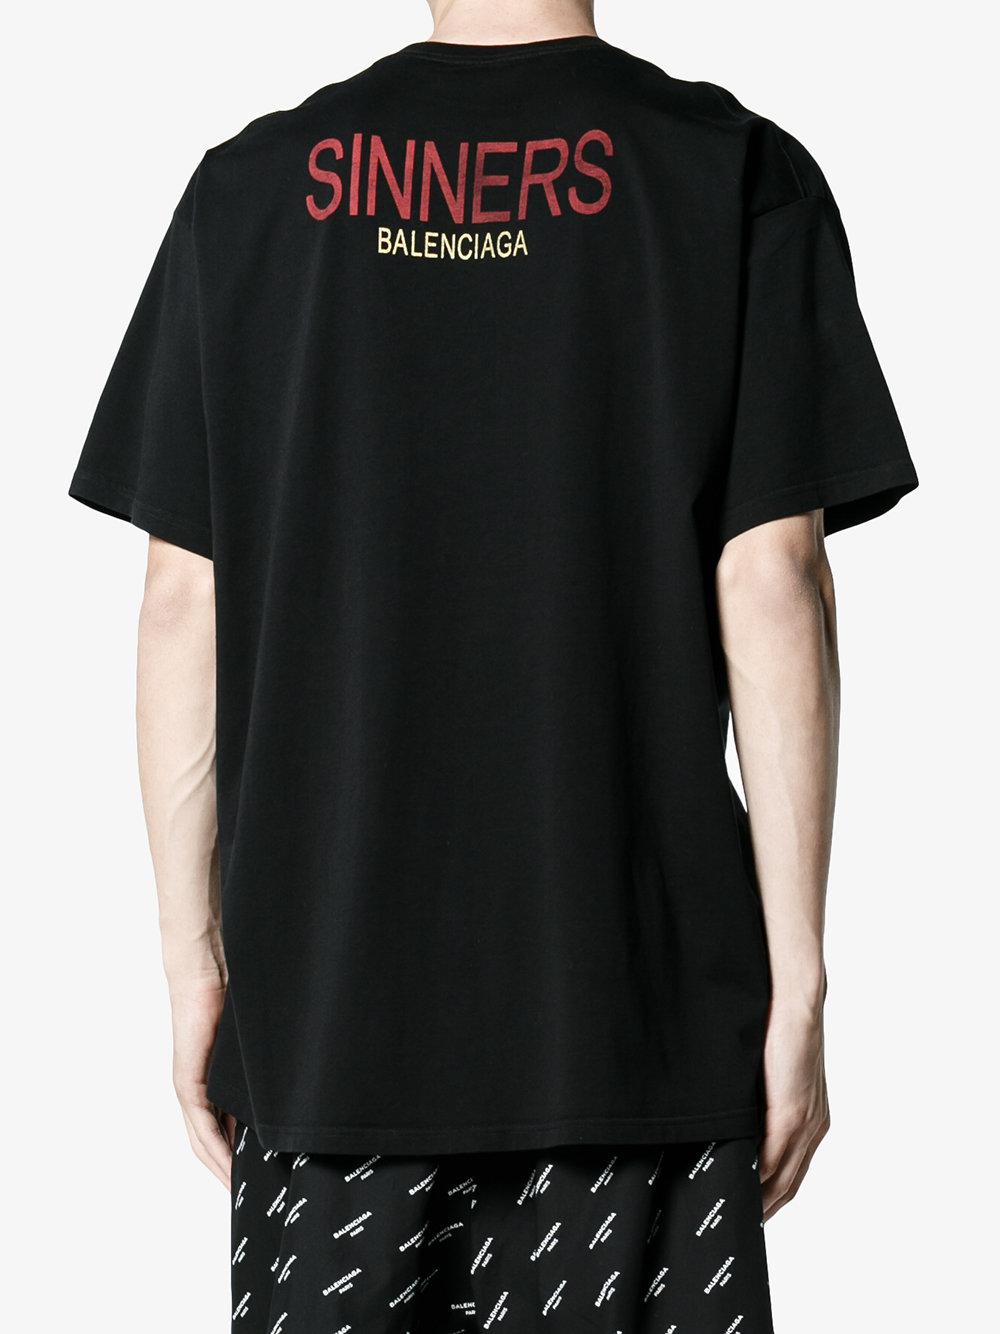 t shirt sinners balenciaga